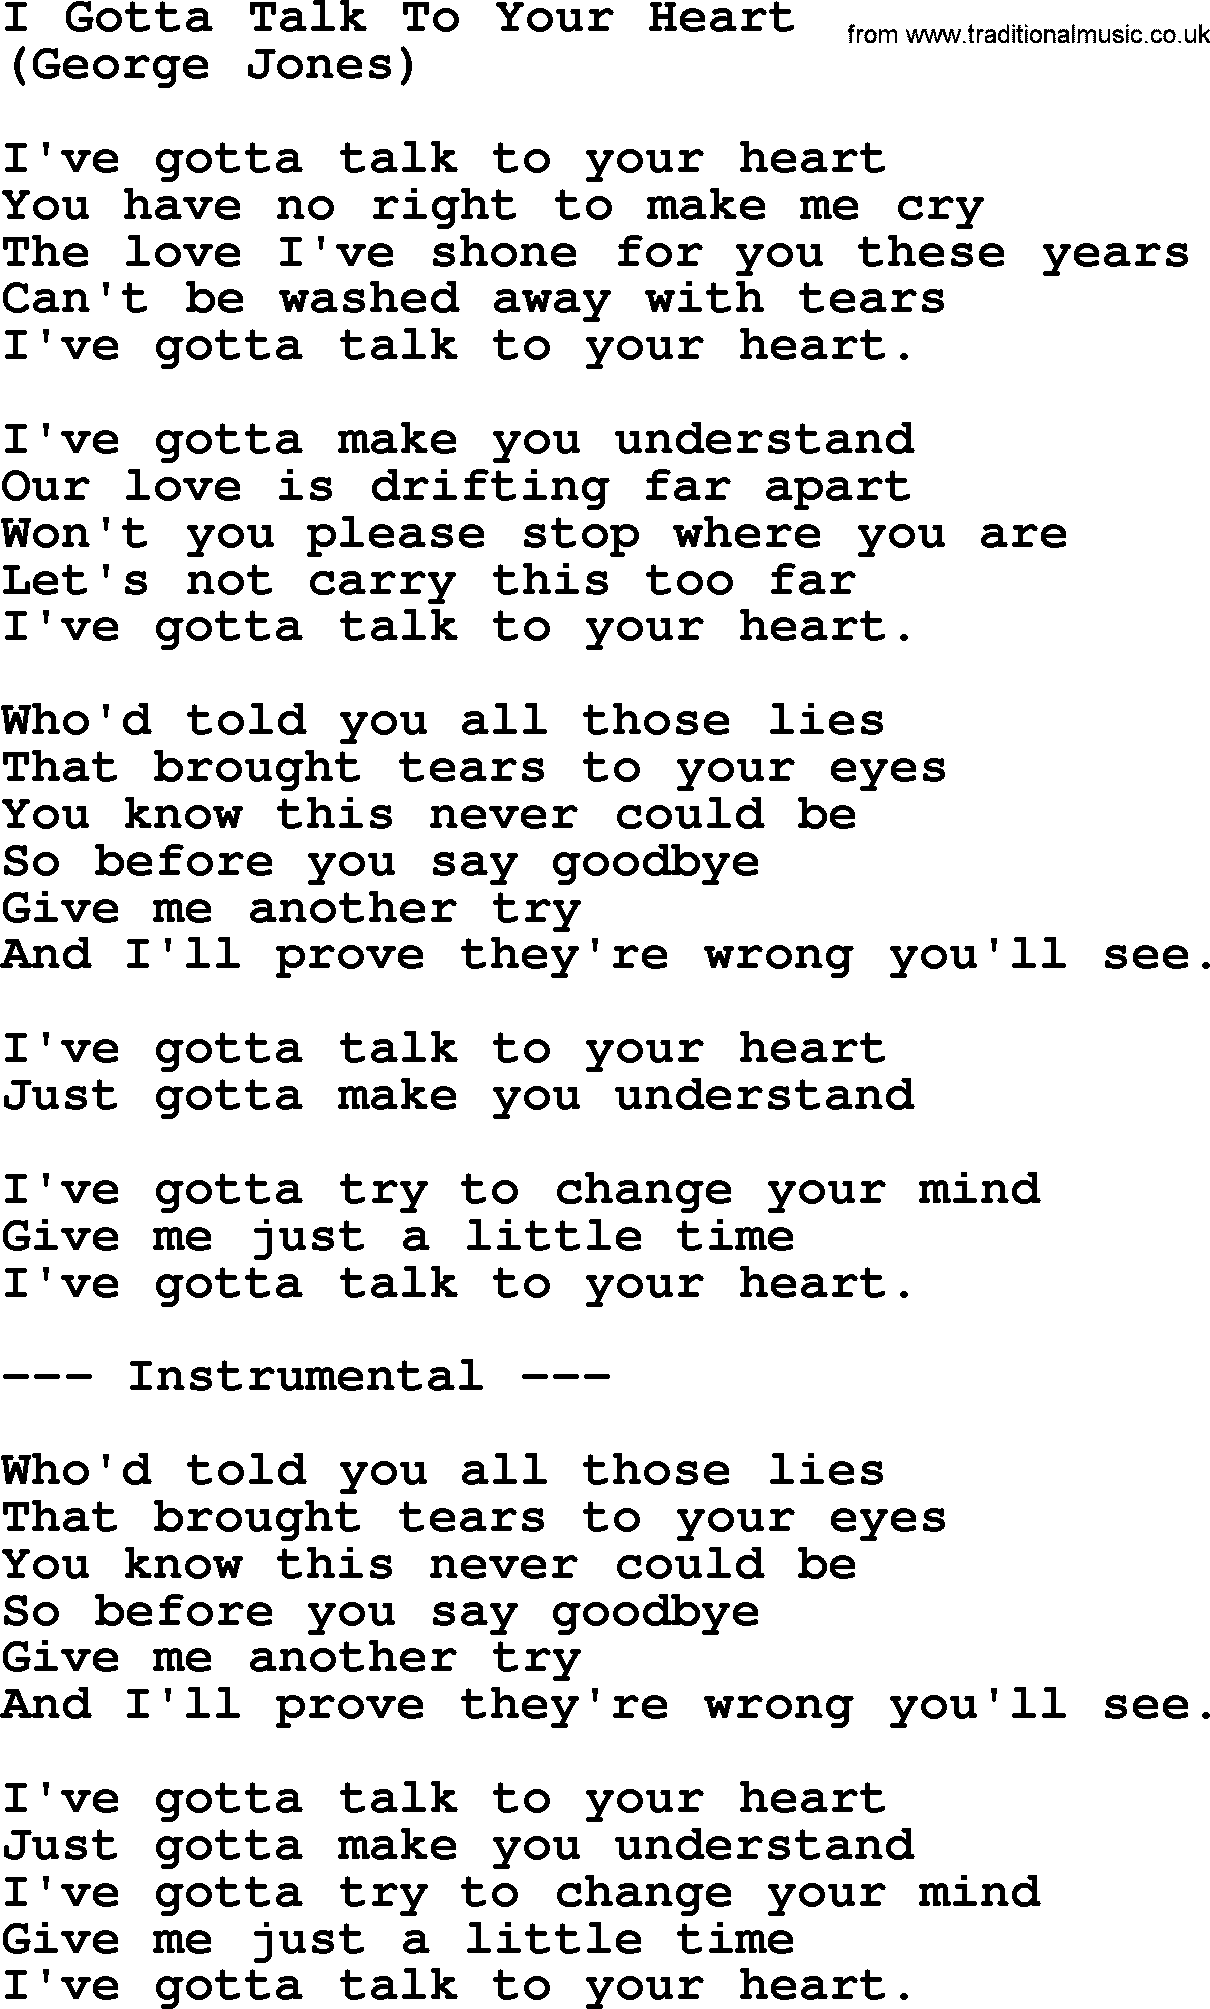 George Jones song: I Gotta Talk To Your Heart, lyrics